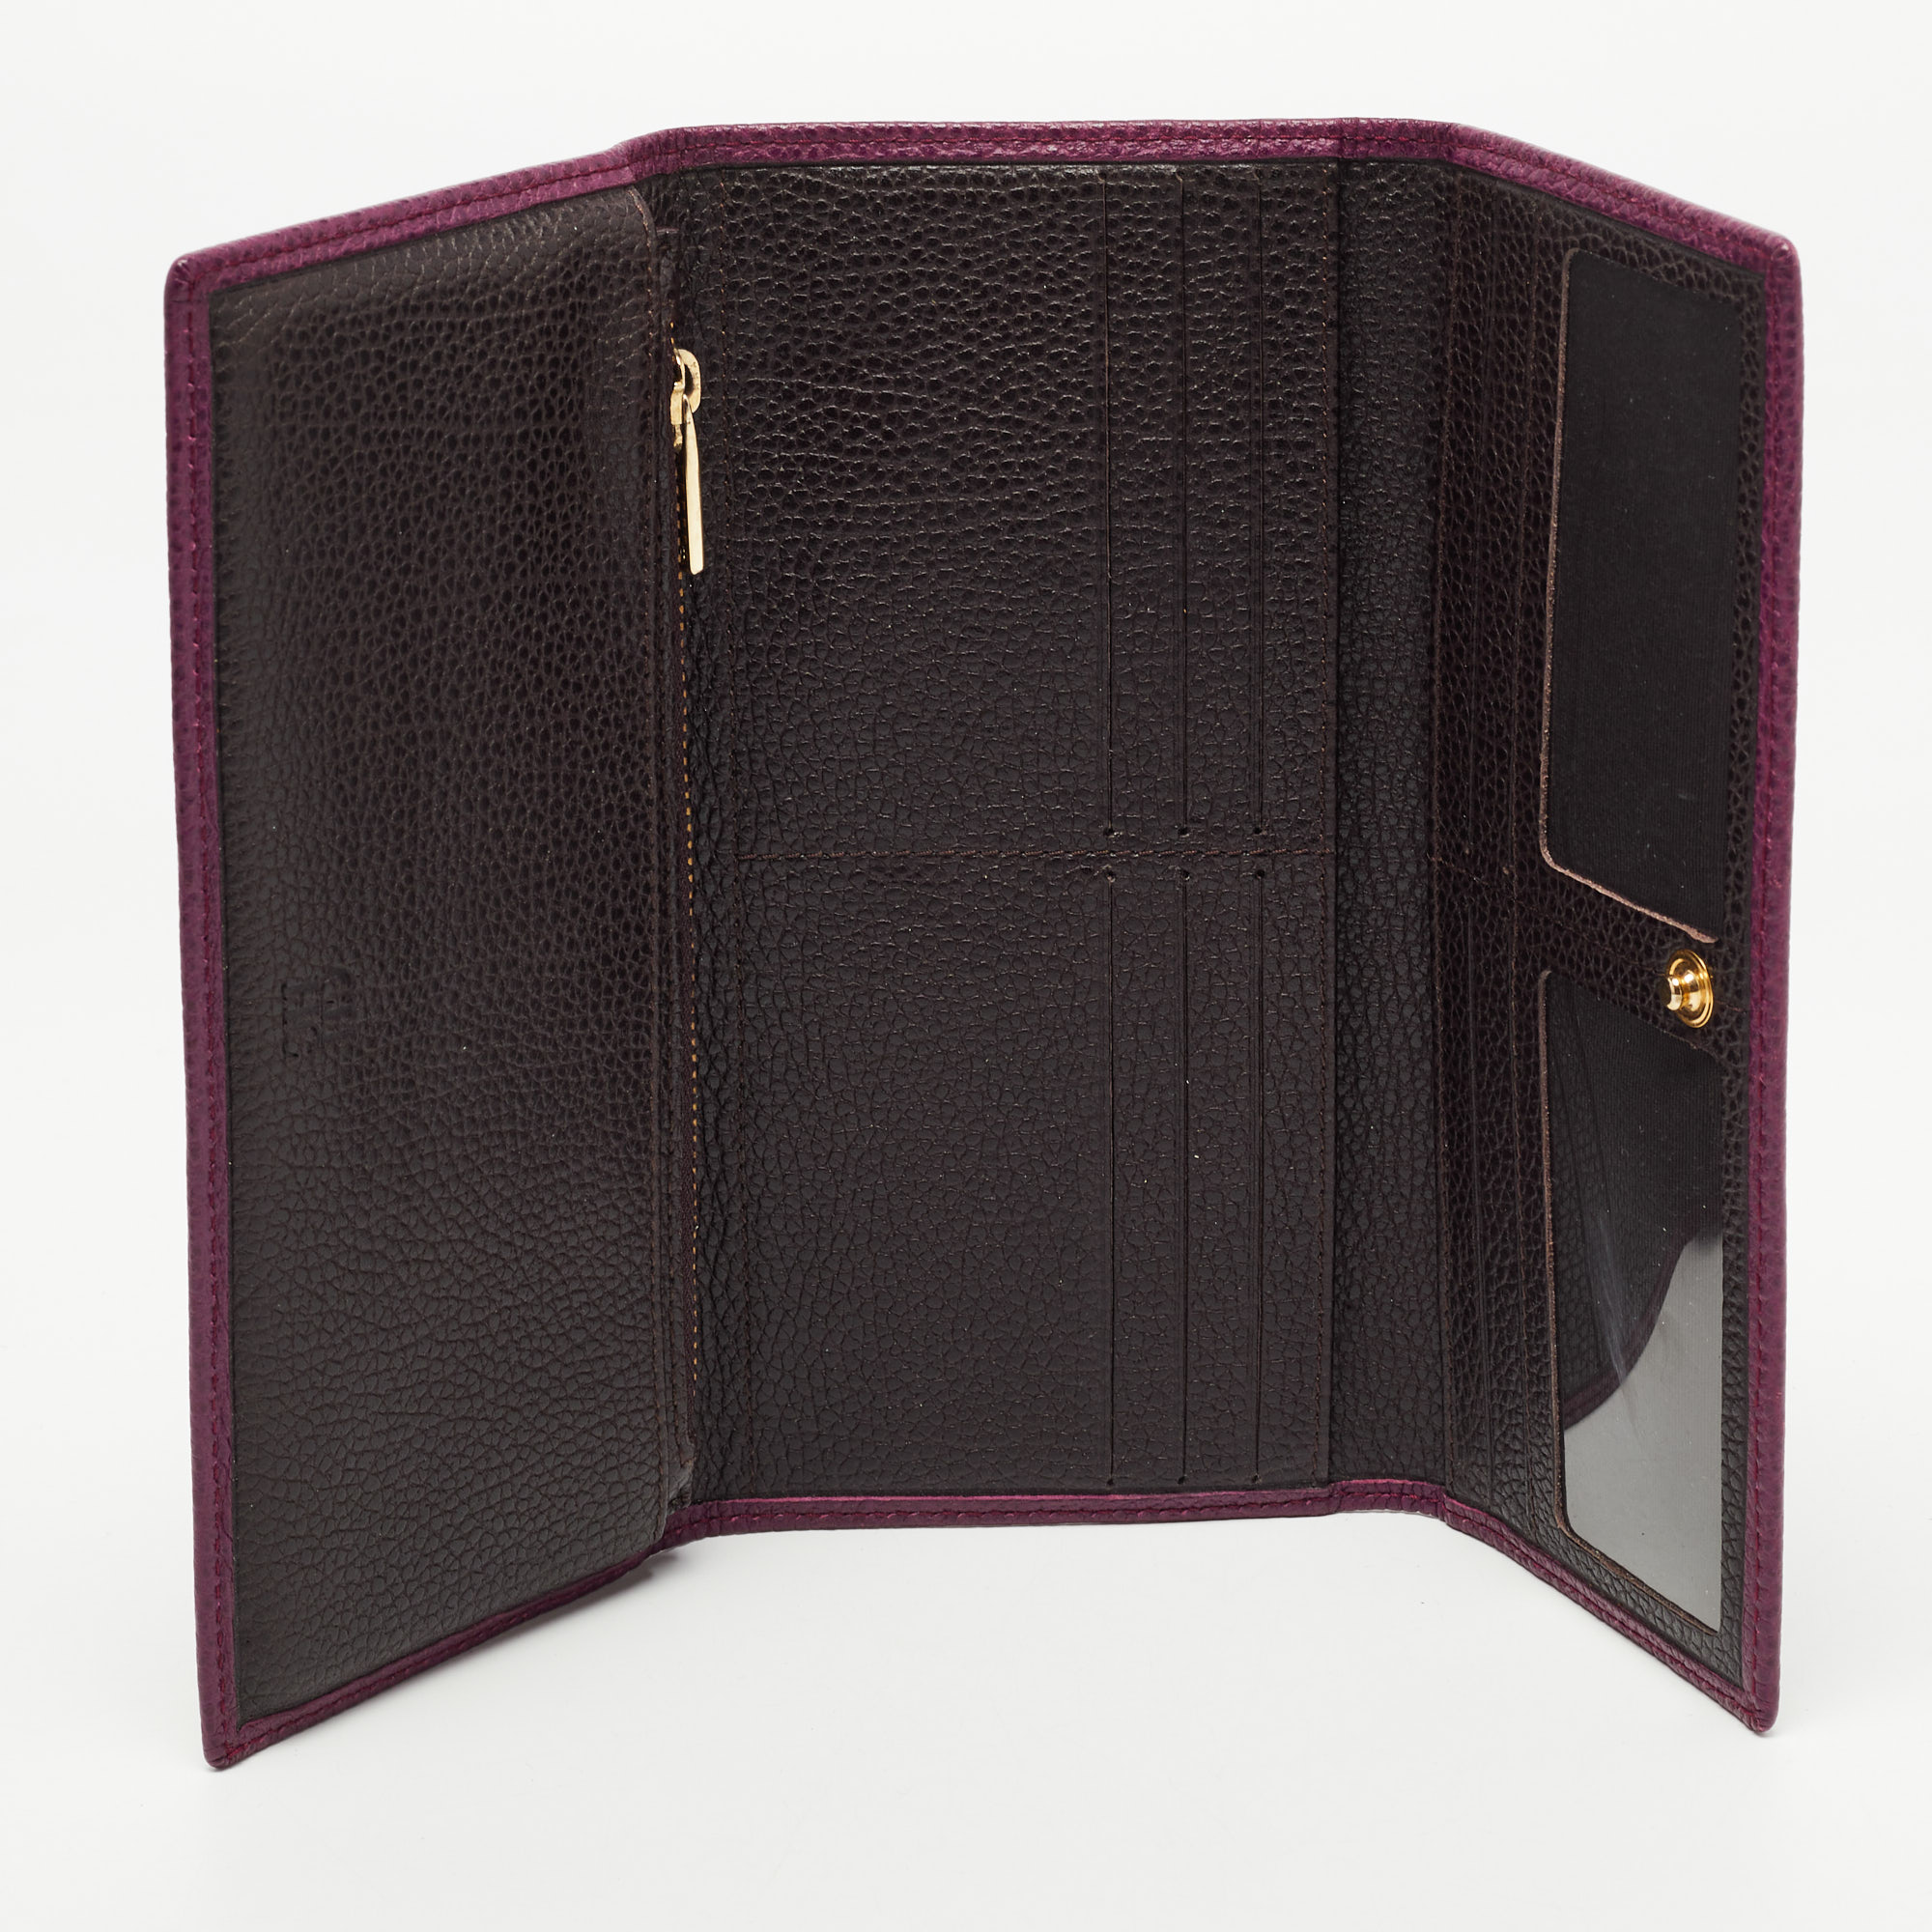 Carolina Herrera Burgundy Leather Trifold Continental Wallet